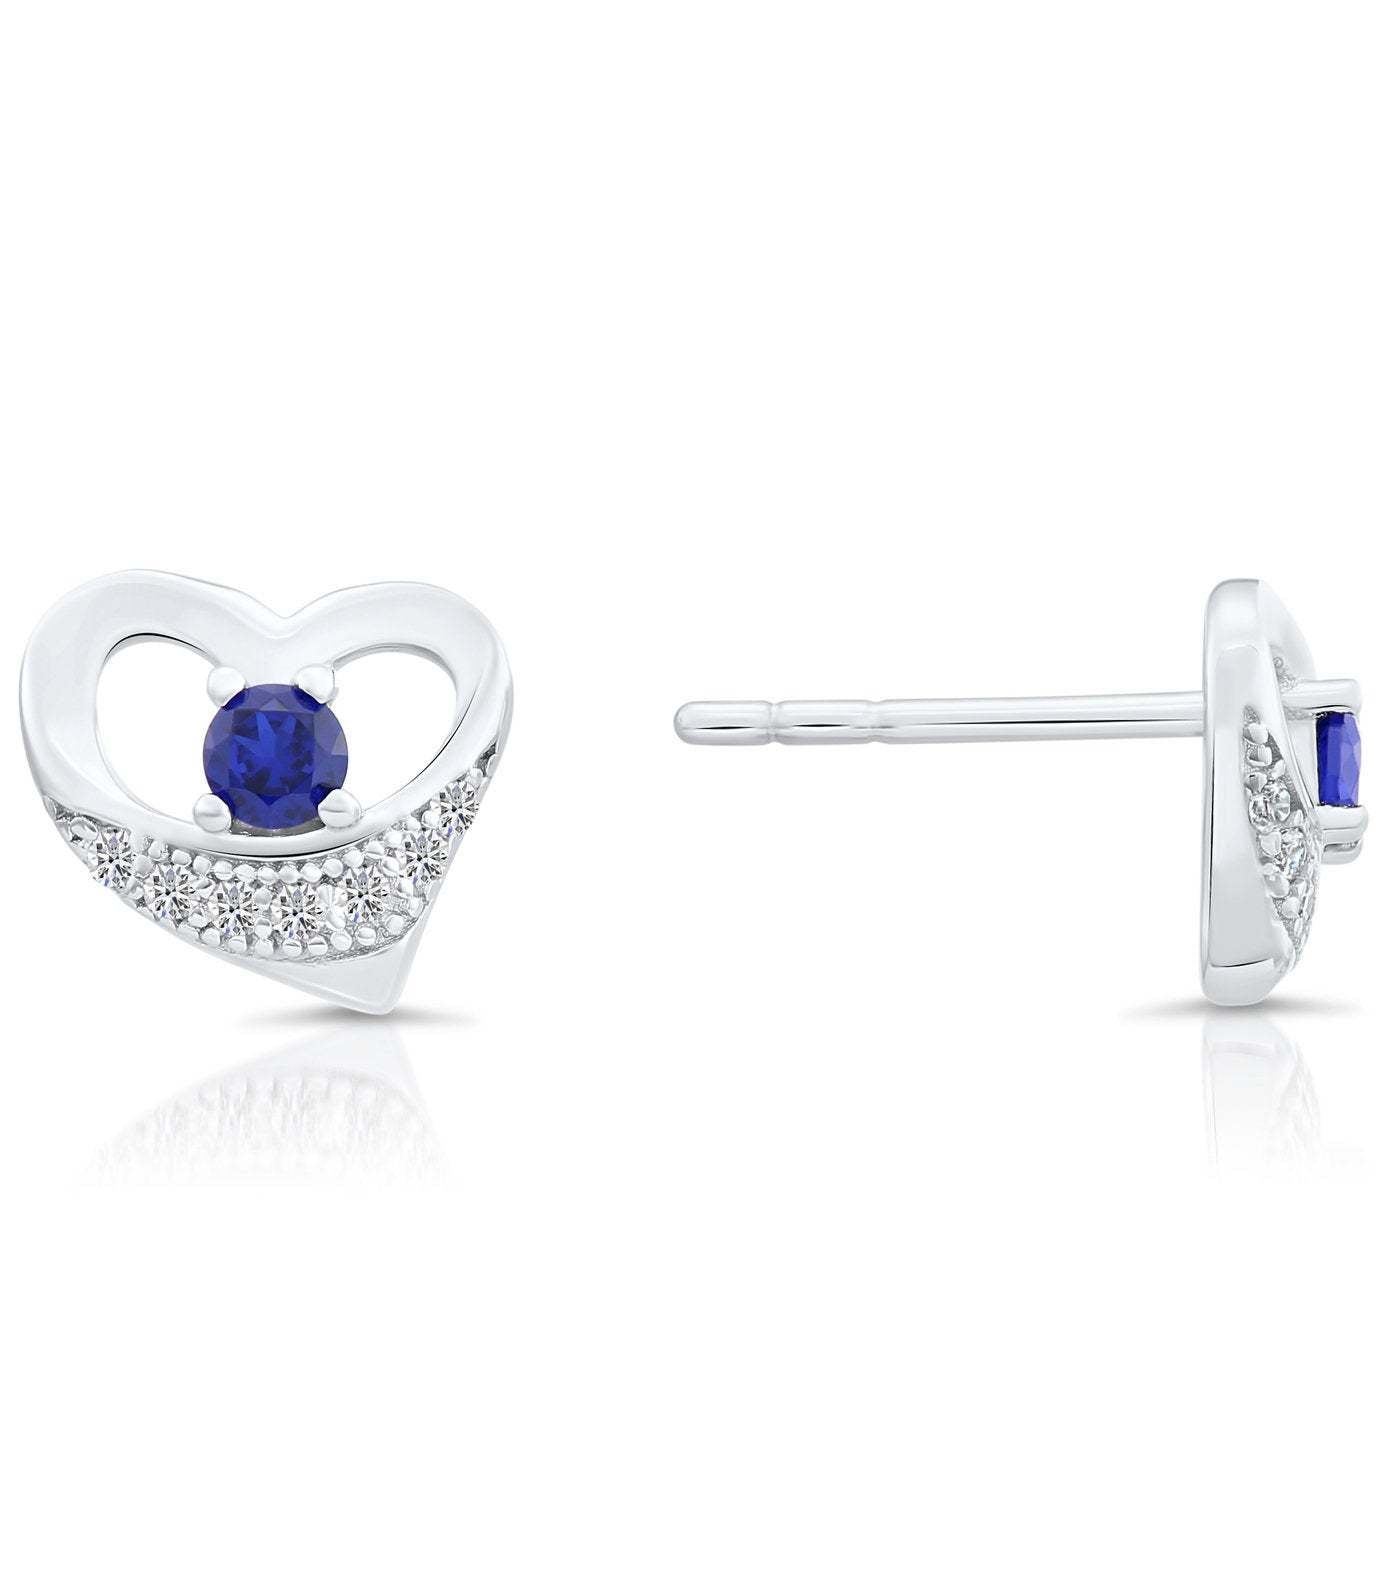 CZ Heart Stud Earrings with Blue Stone in Sterling Silver